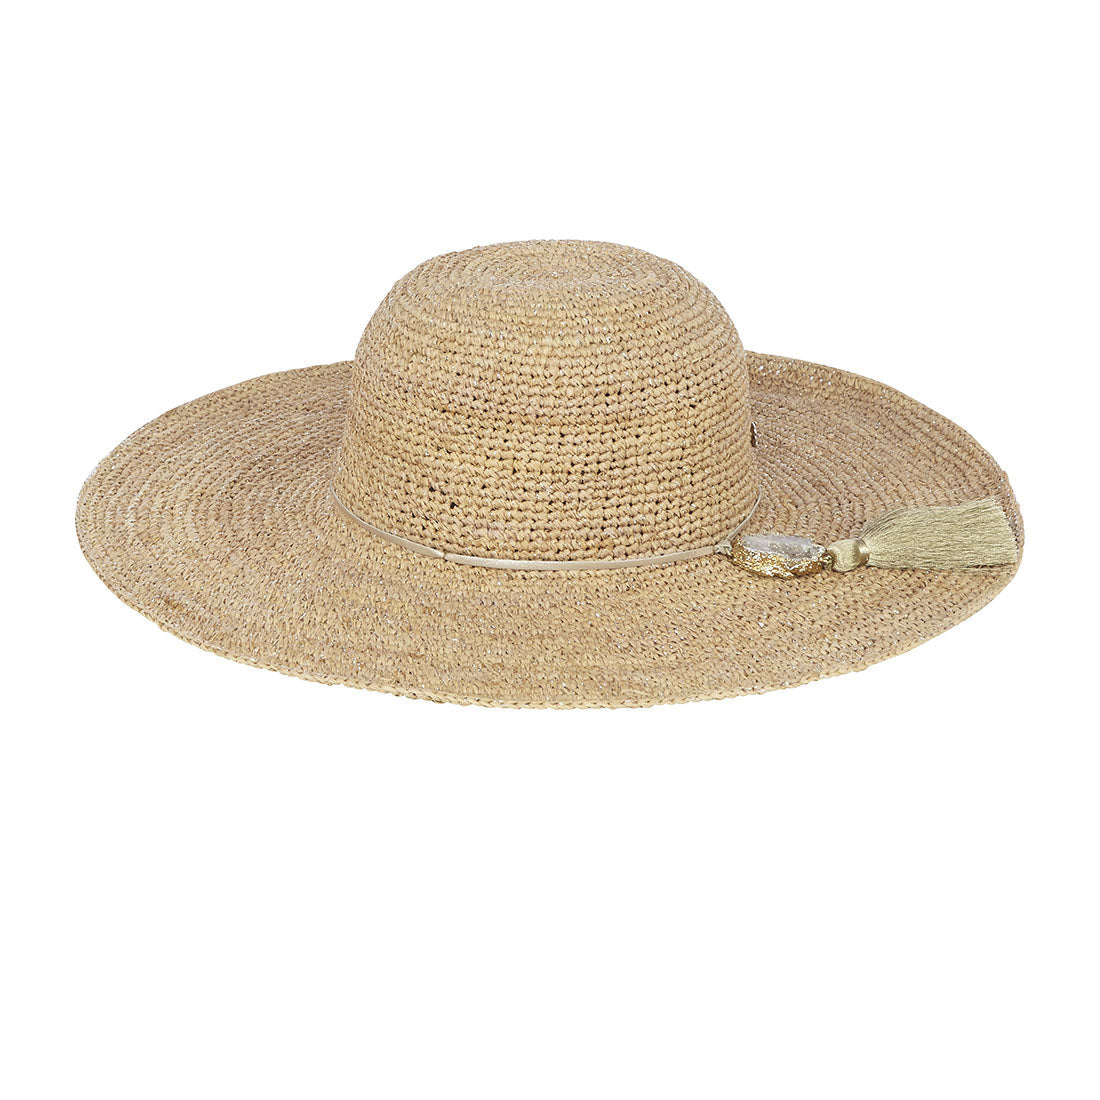 Lupita Hat - Premium Hats from Marina St Barth - Just $220.00! Shop now at Marina St Barth